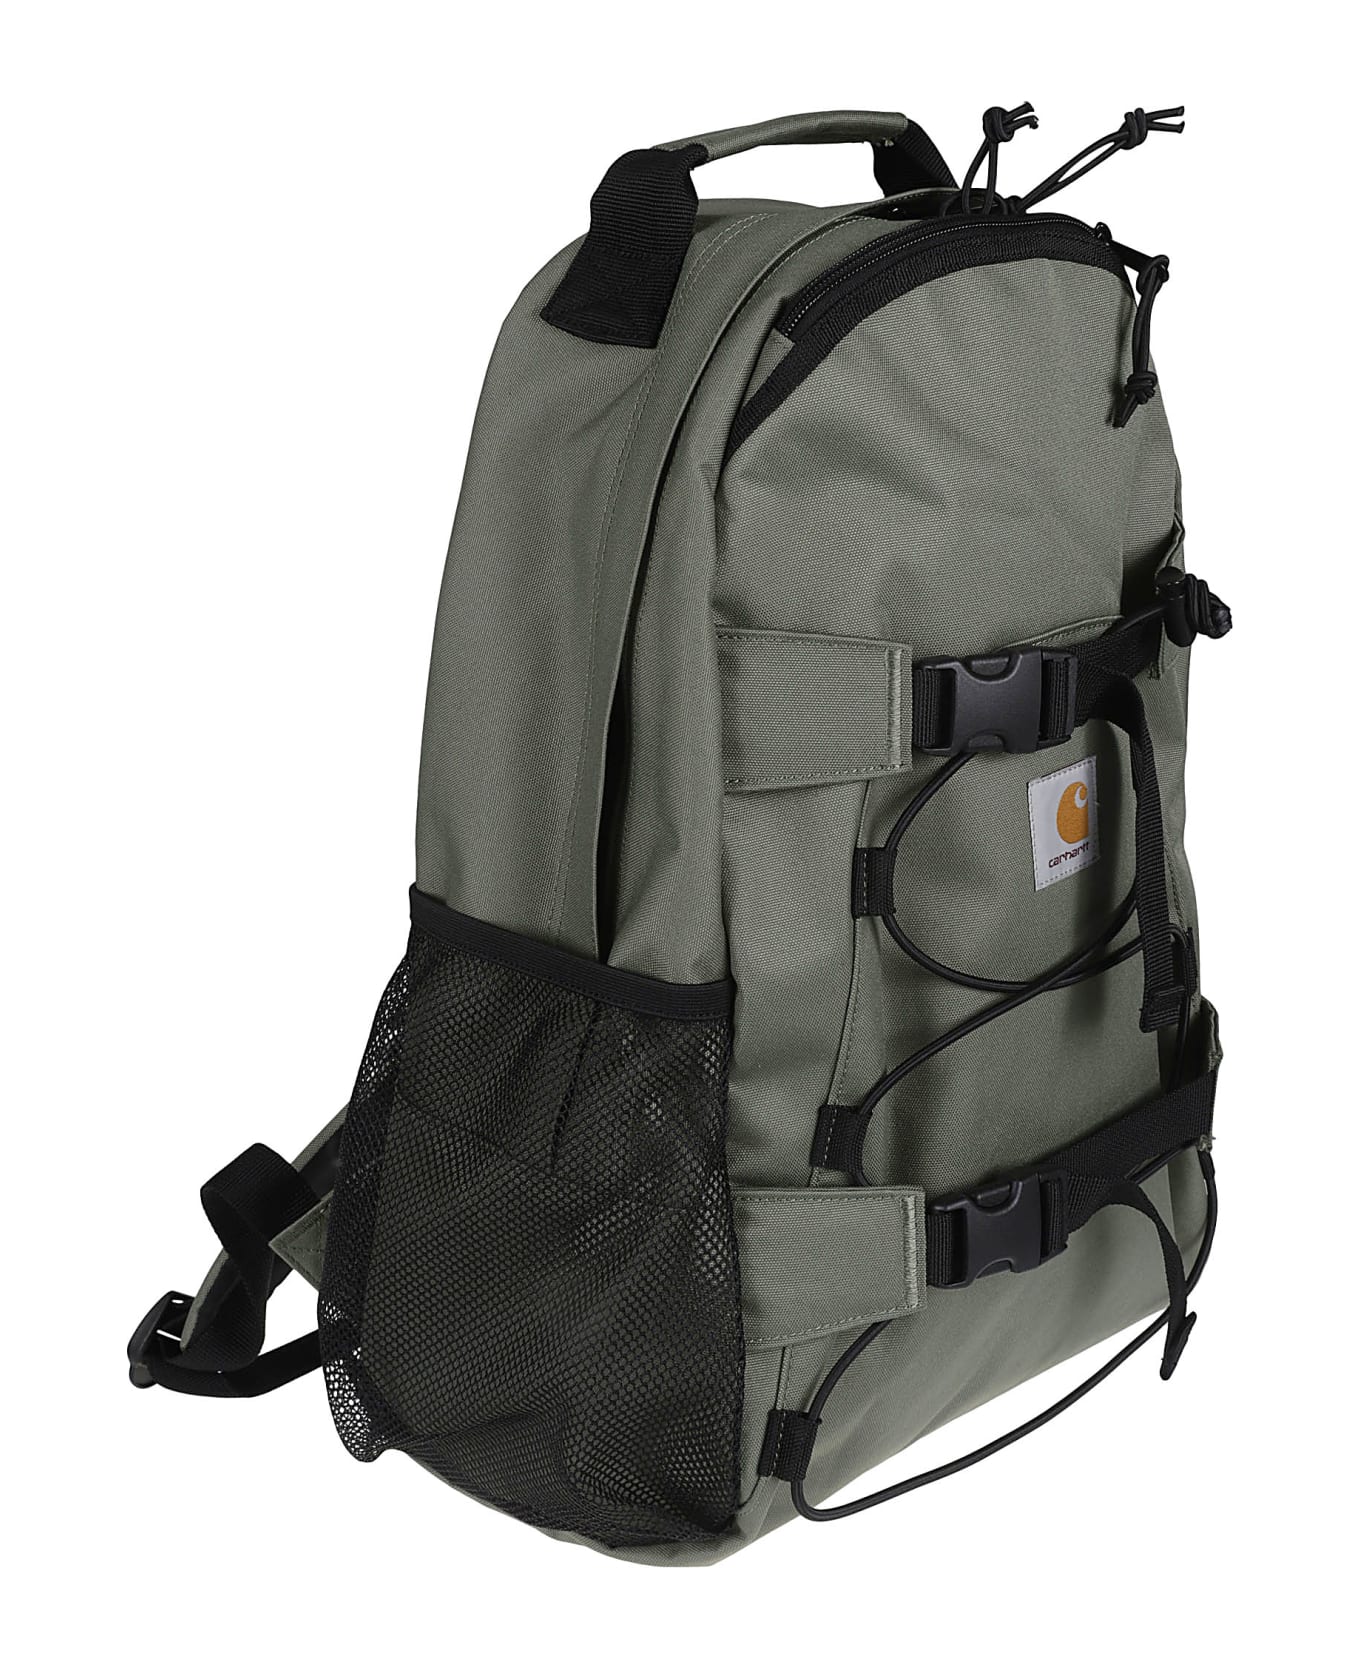 Carhartt Logo Snap Backpack - Green